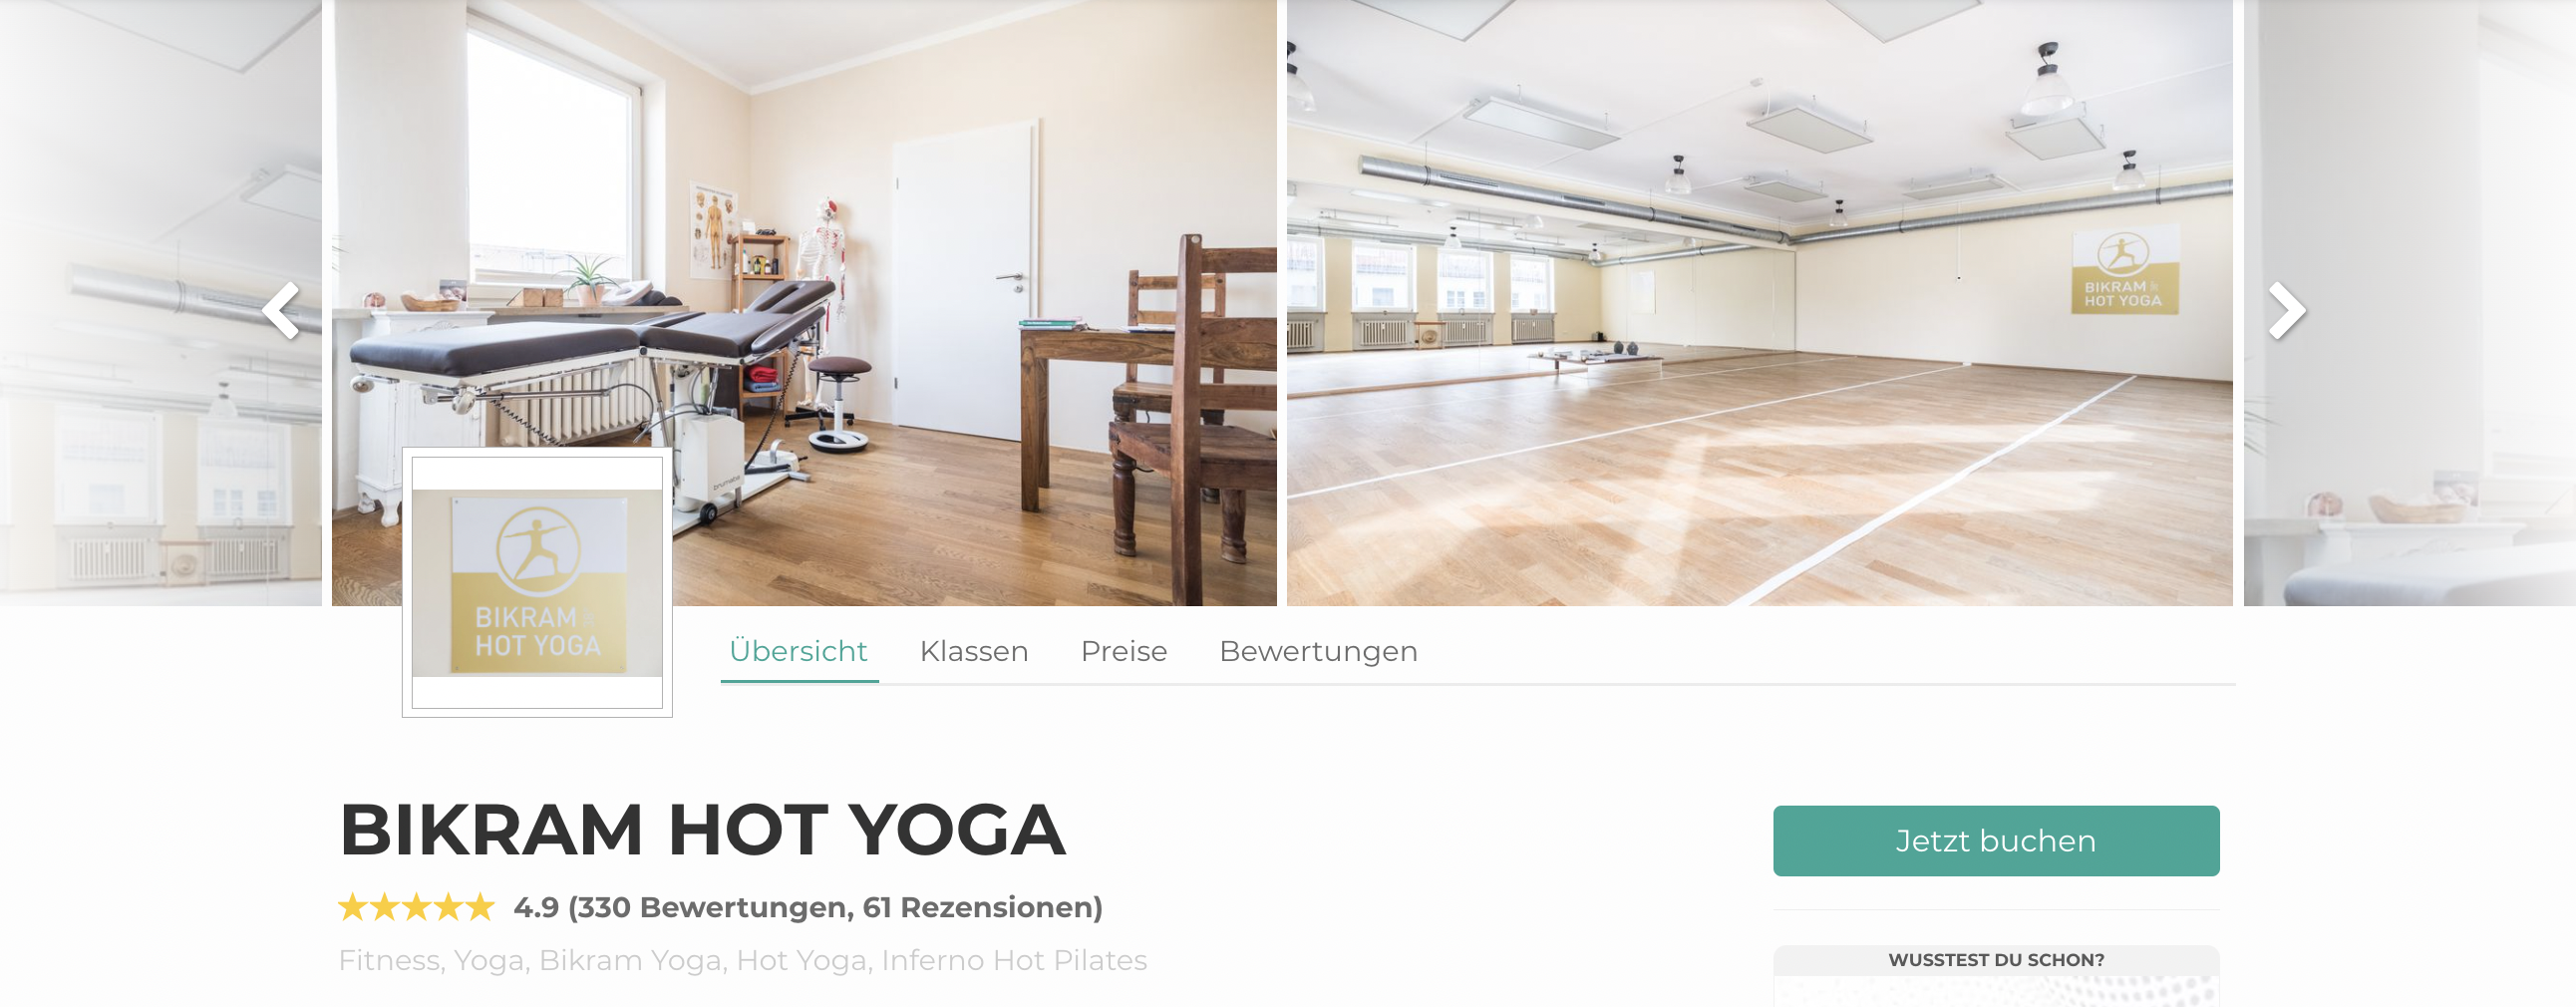 Bikram Hot Yoga ist top Yoga Studio in München